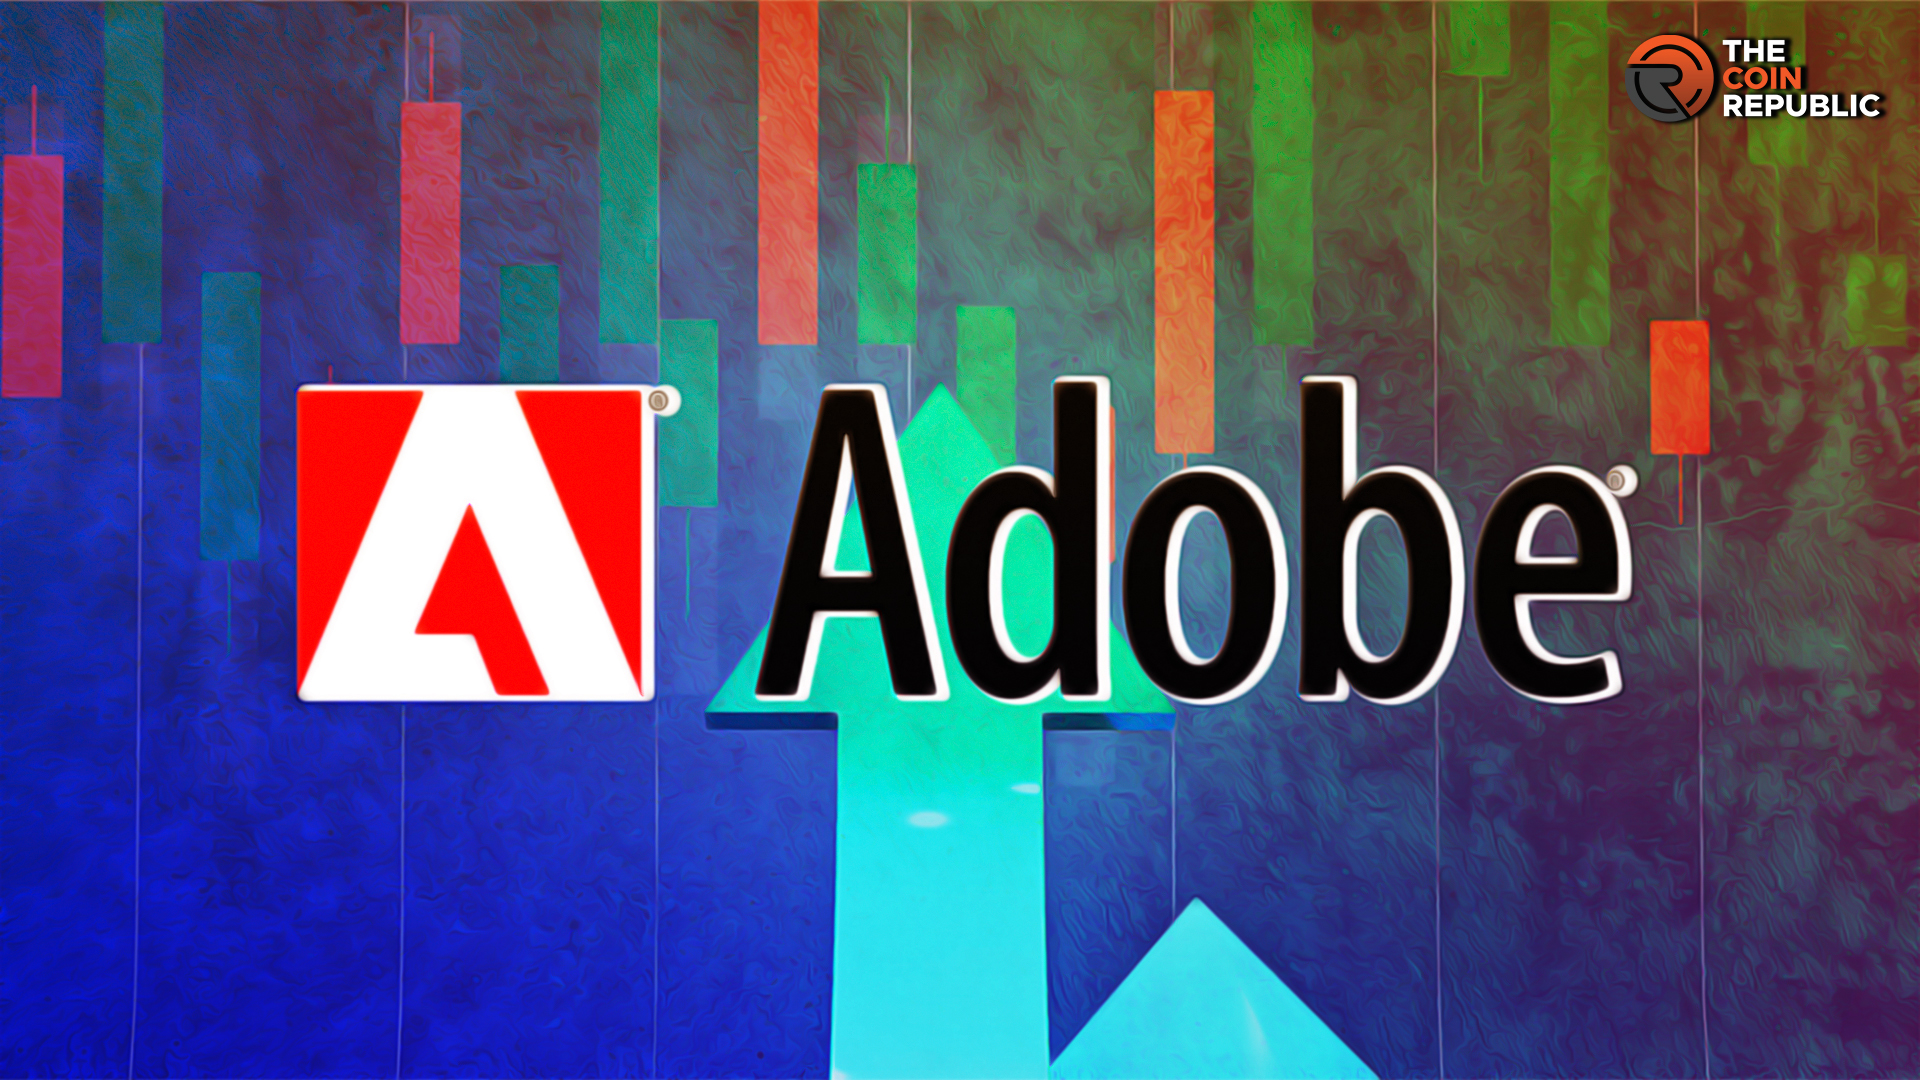 Adobe Stock: What’s Next In ADBE Stock Price – $550 Or $500?